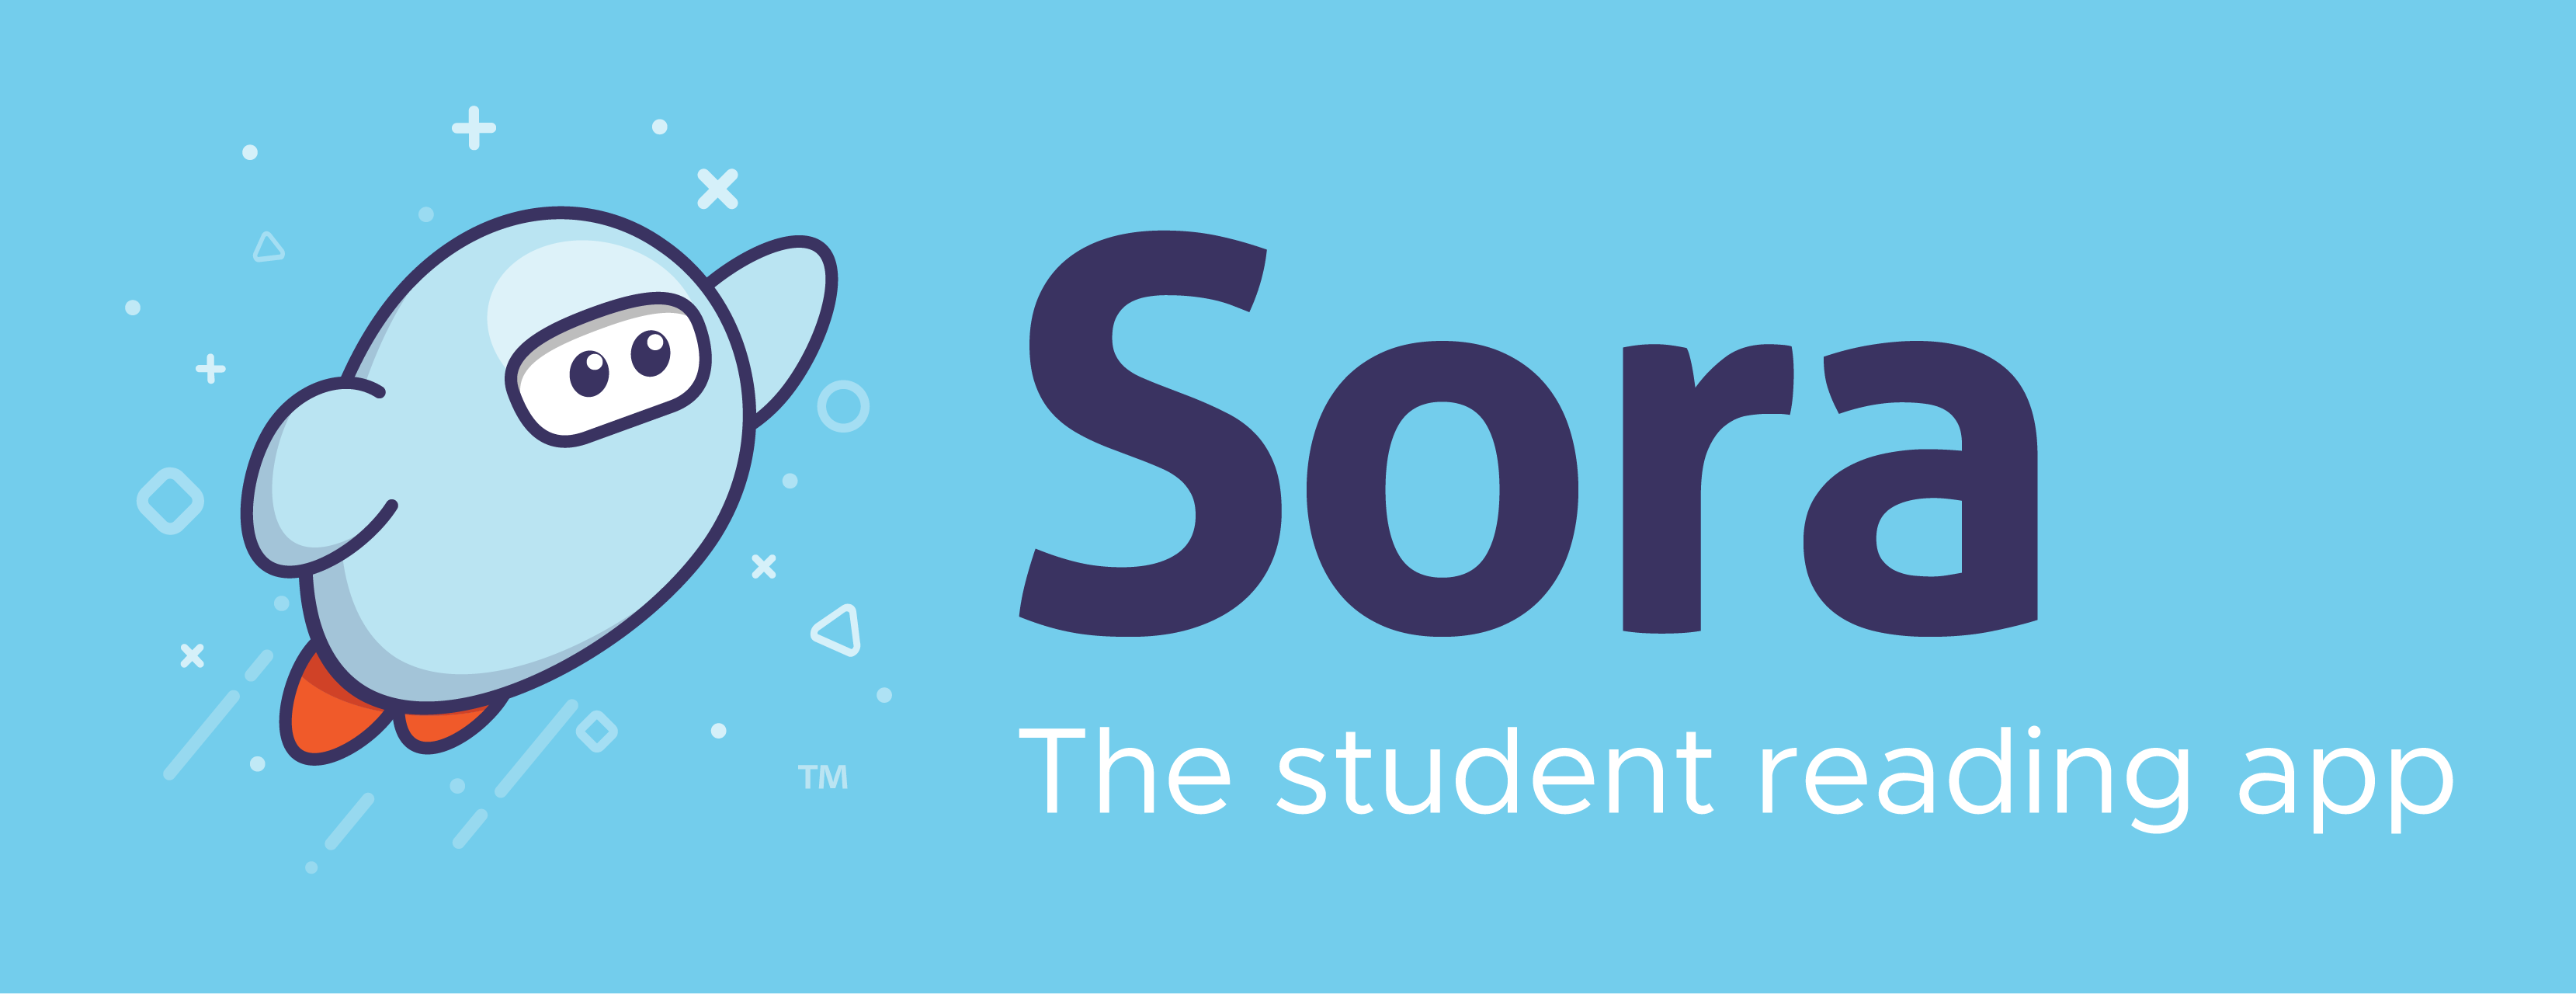 School & Library Spotlight 2019 OverDrive Education Celebrates Sora